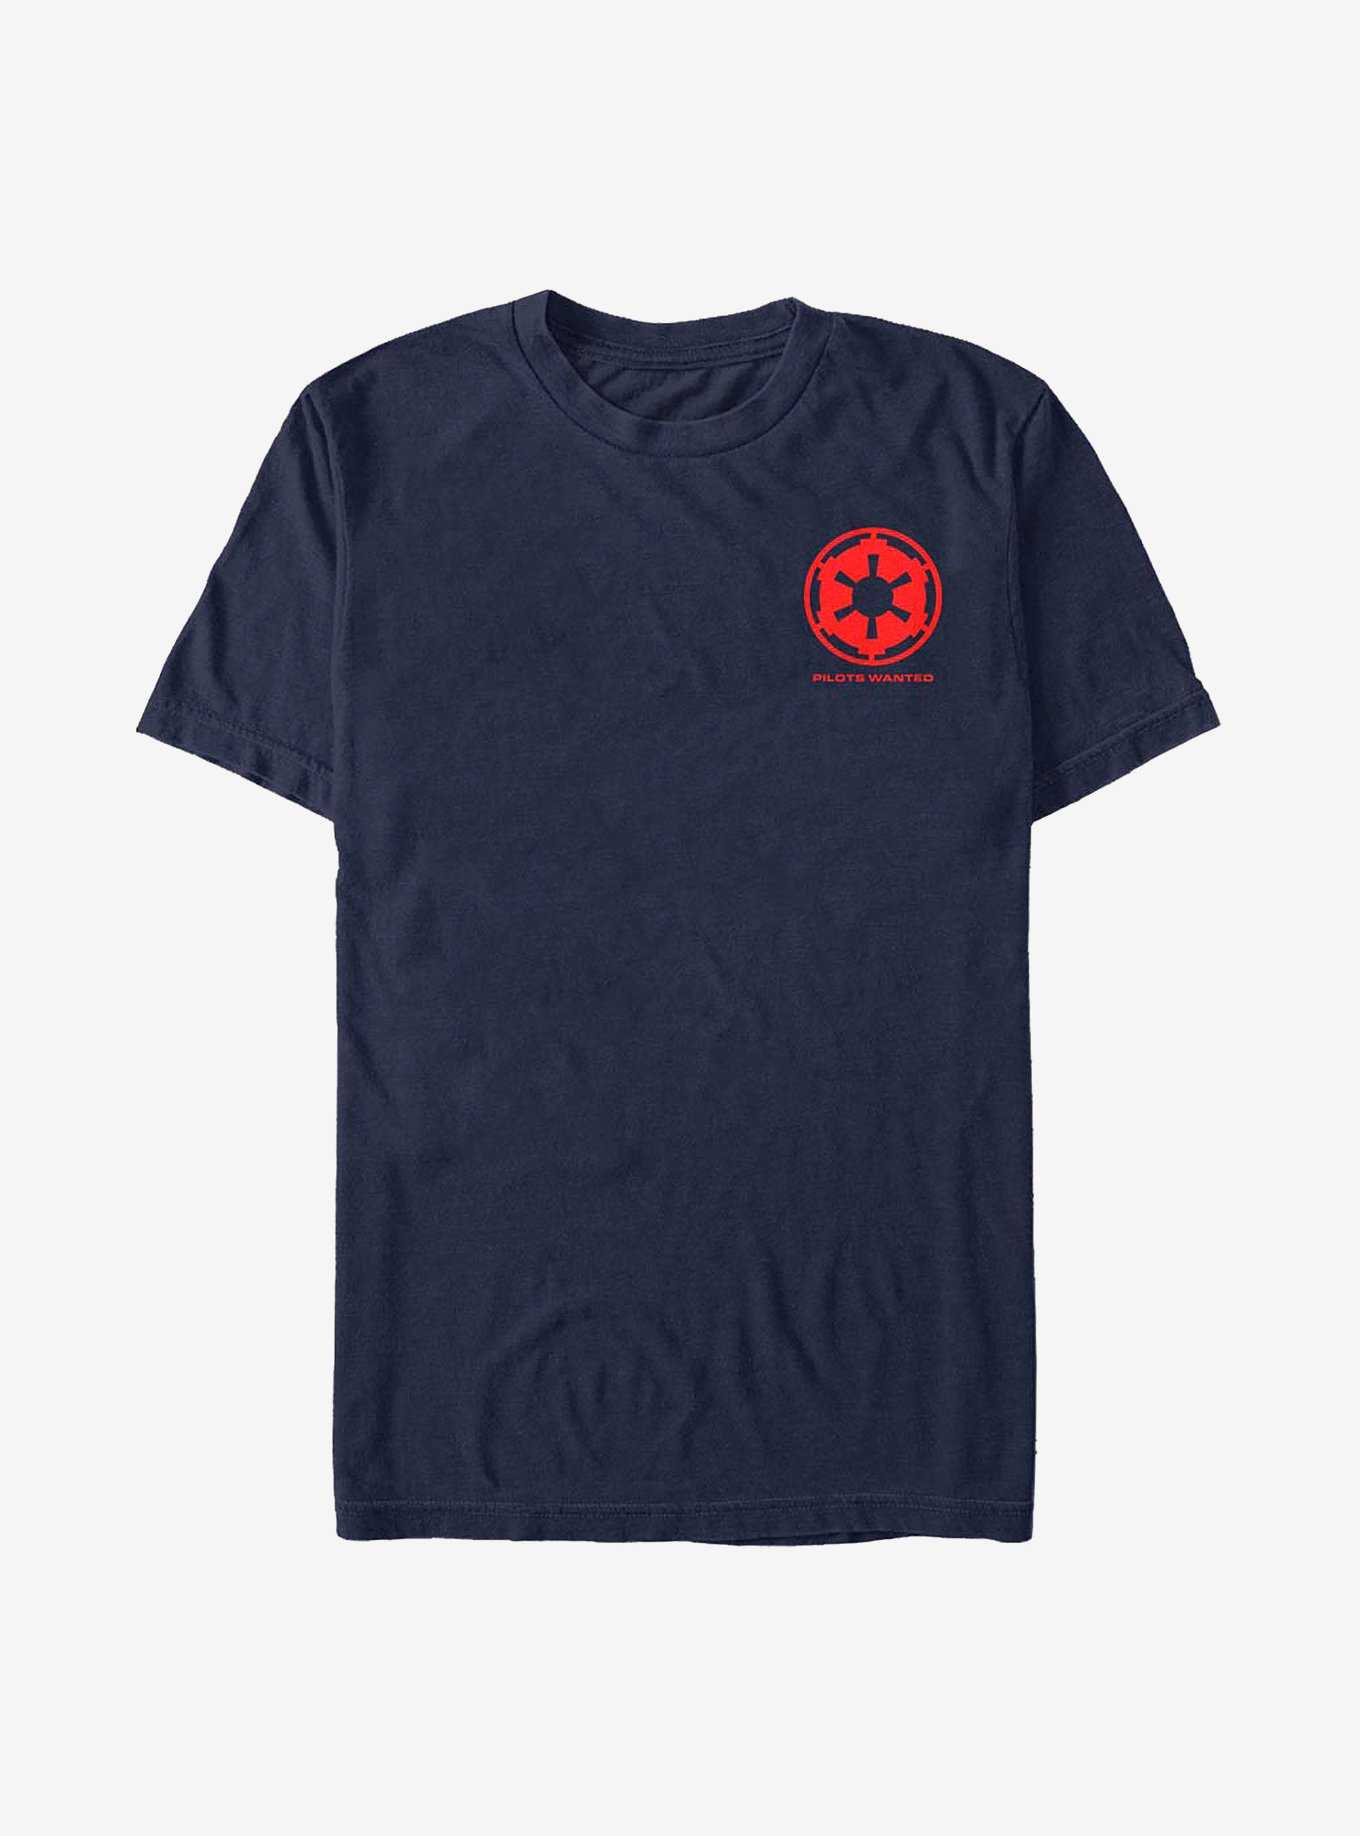 Star Wars Empire Logo T-Shirt, , hi-res